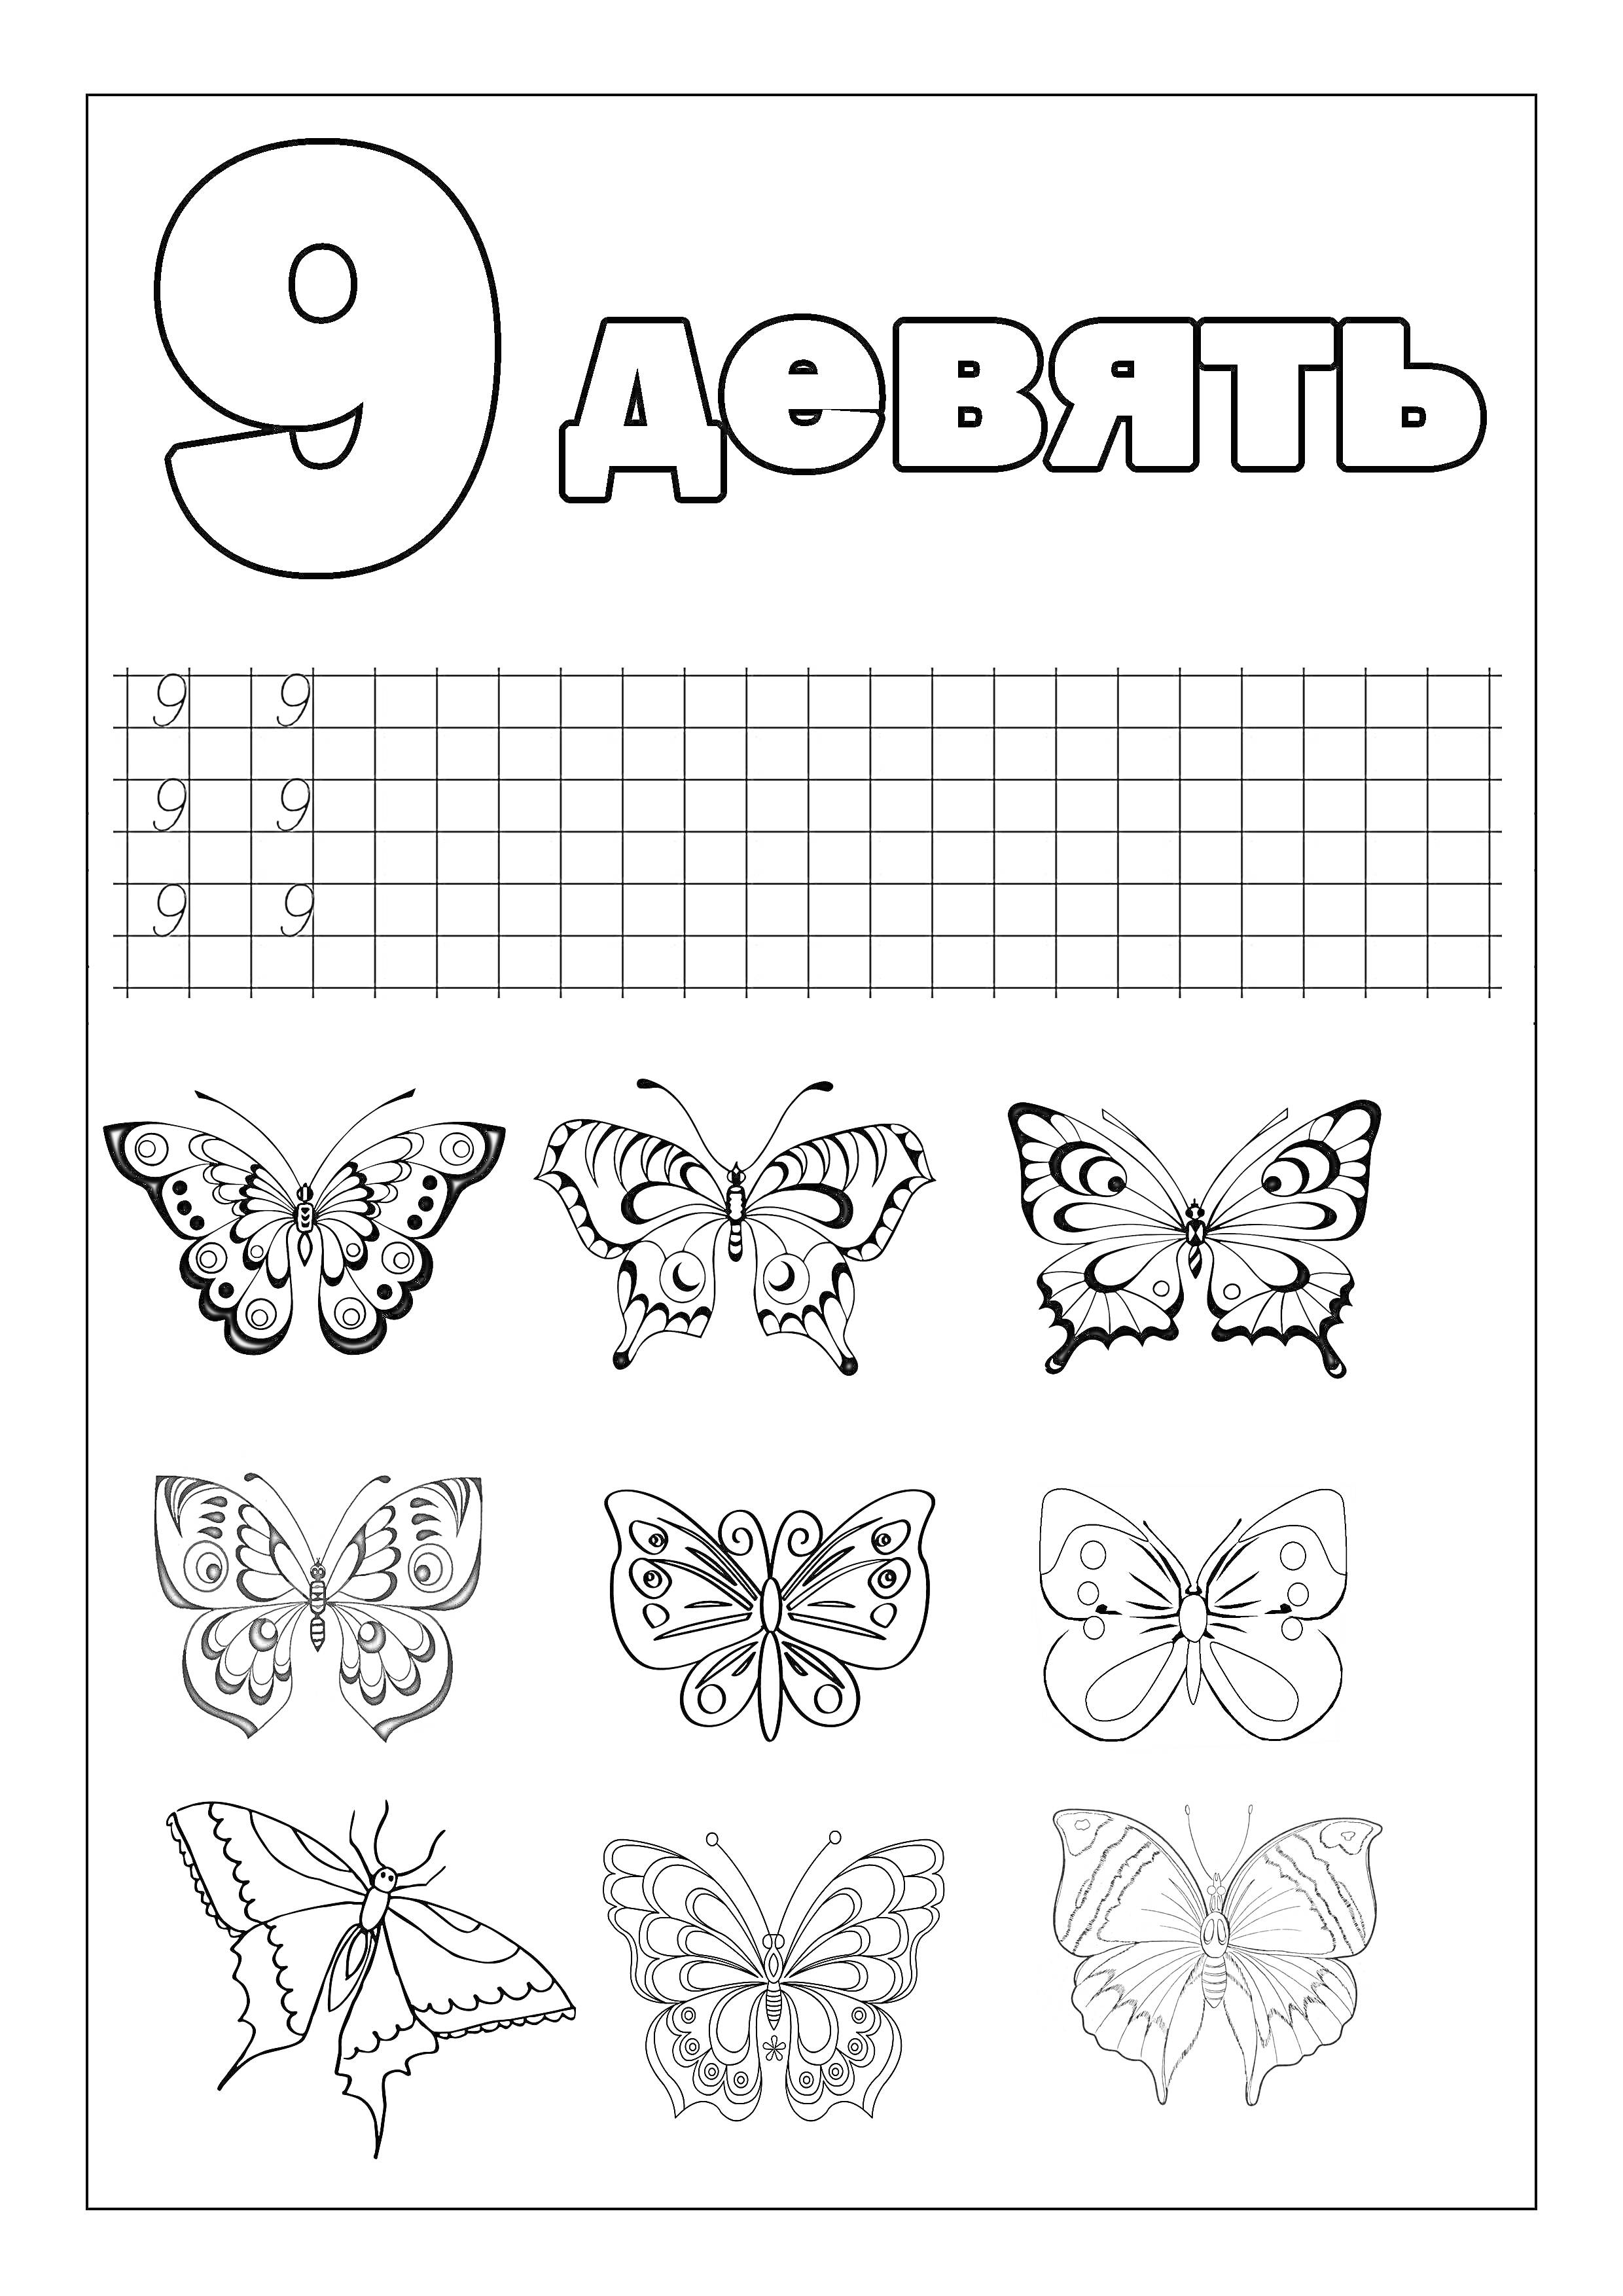 Раскраска Раскраска с цифрой 9 и девятью бабочками